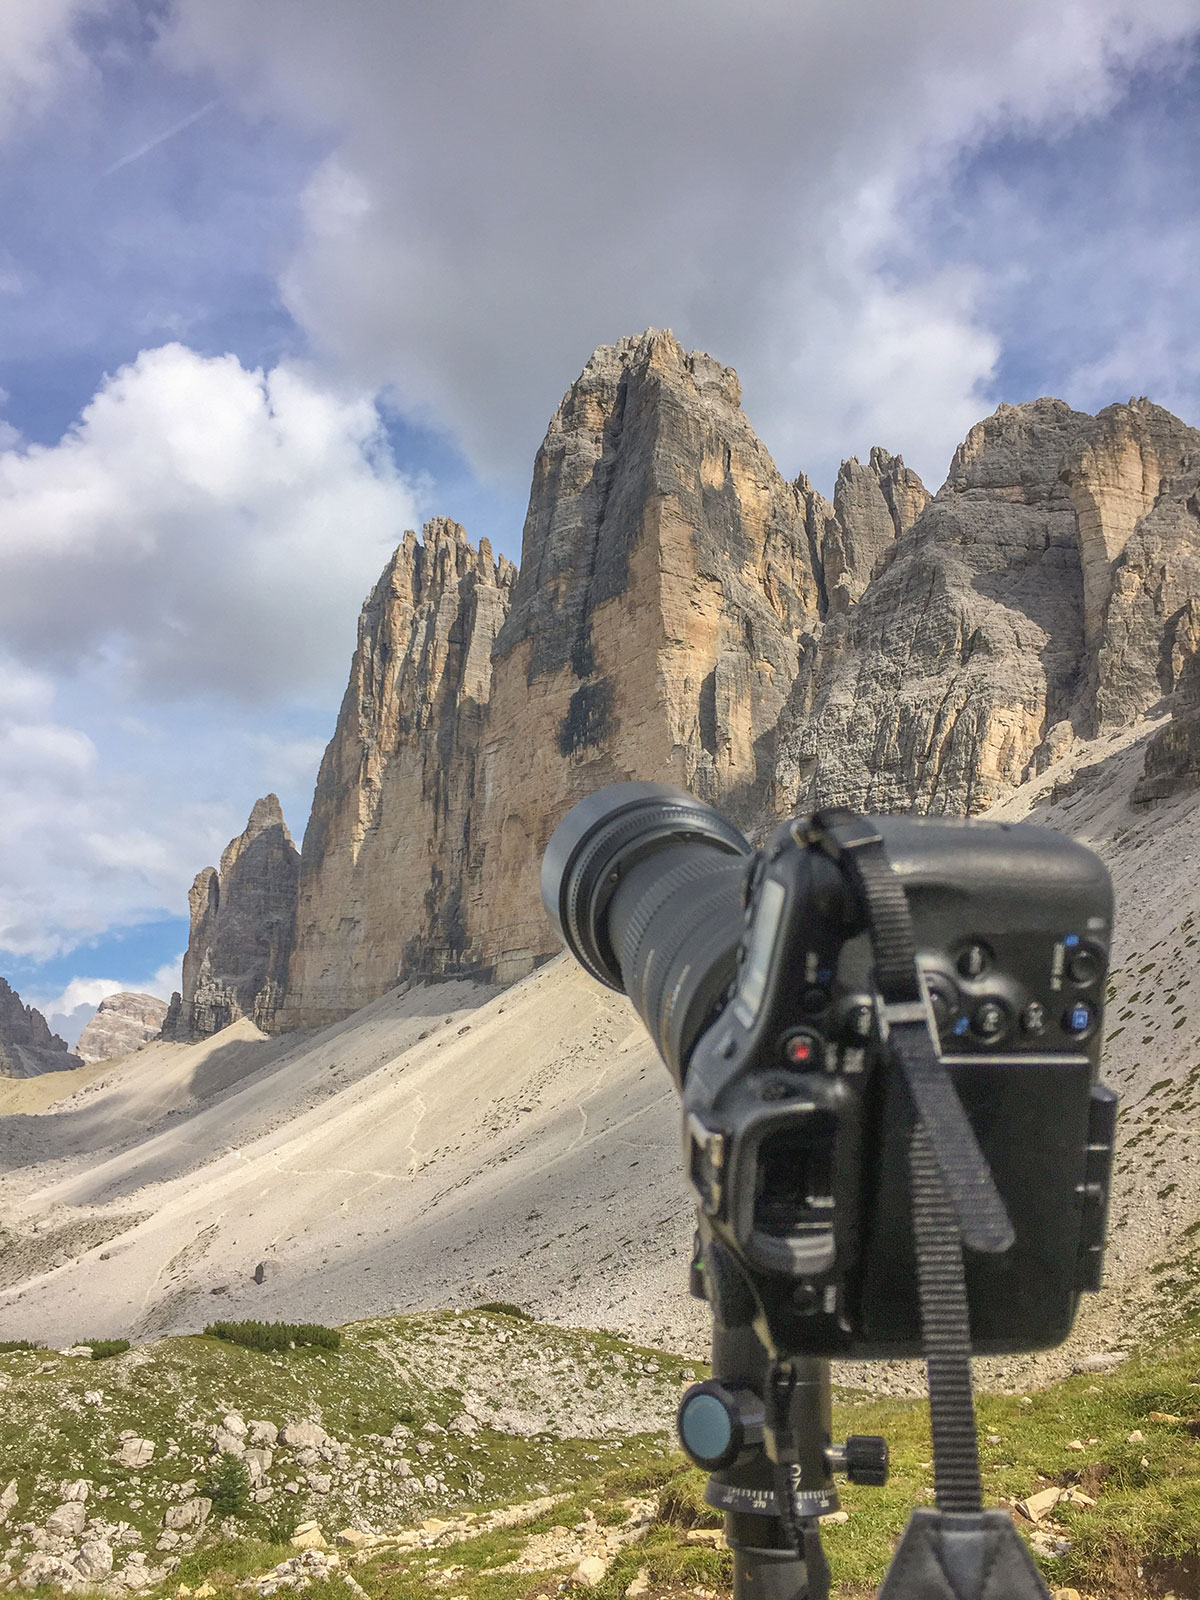 Three Peaks Dolomites, Italy with Sony A99